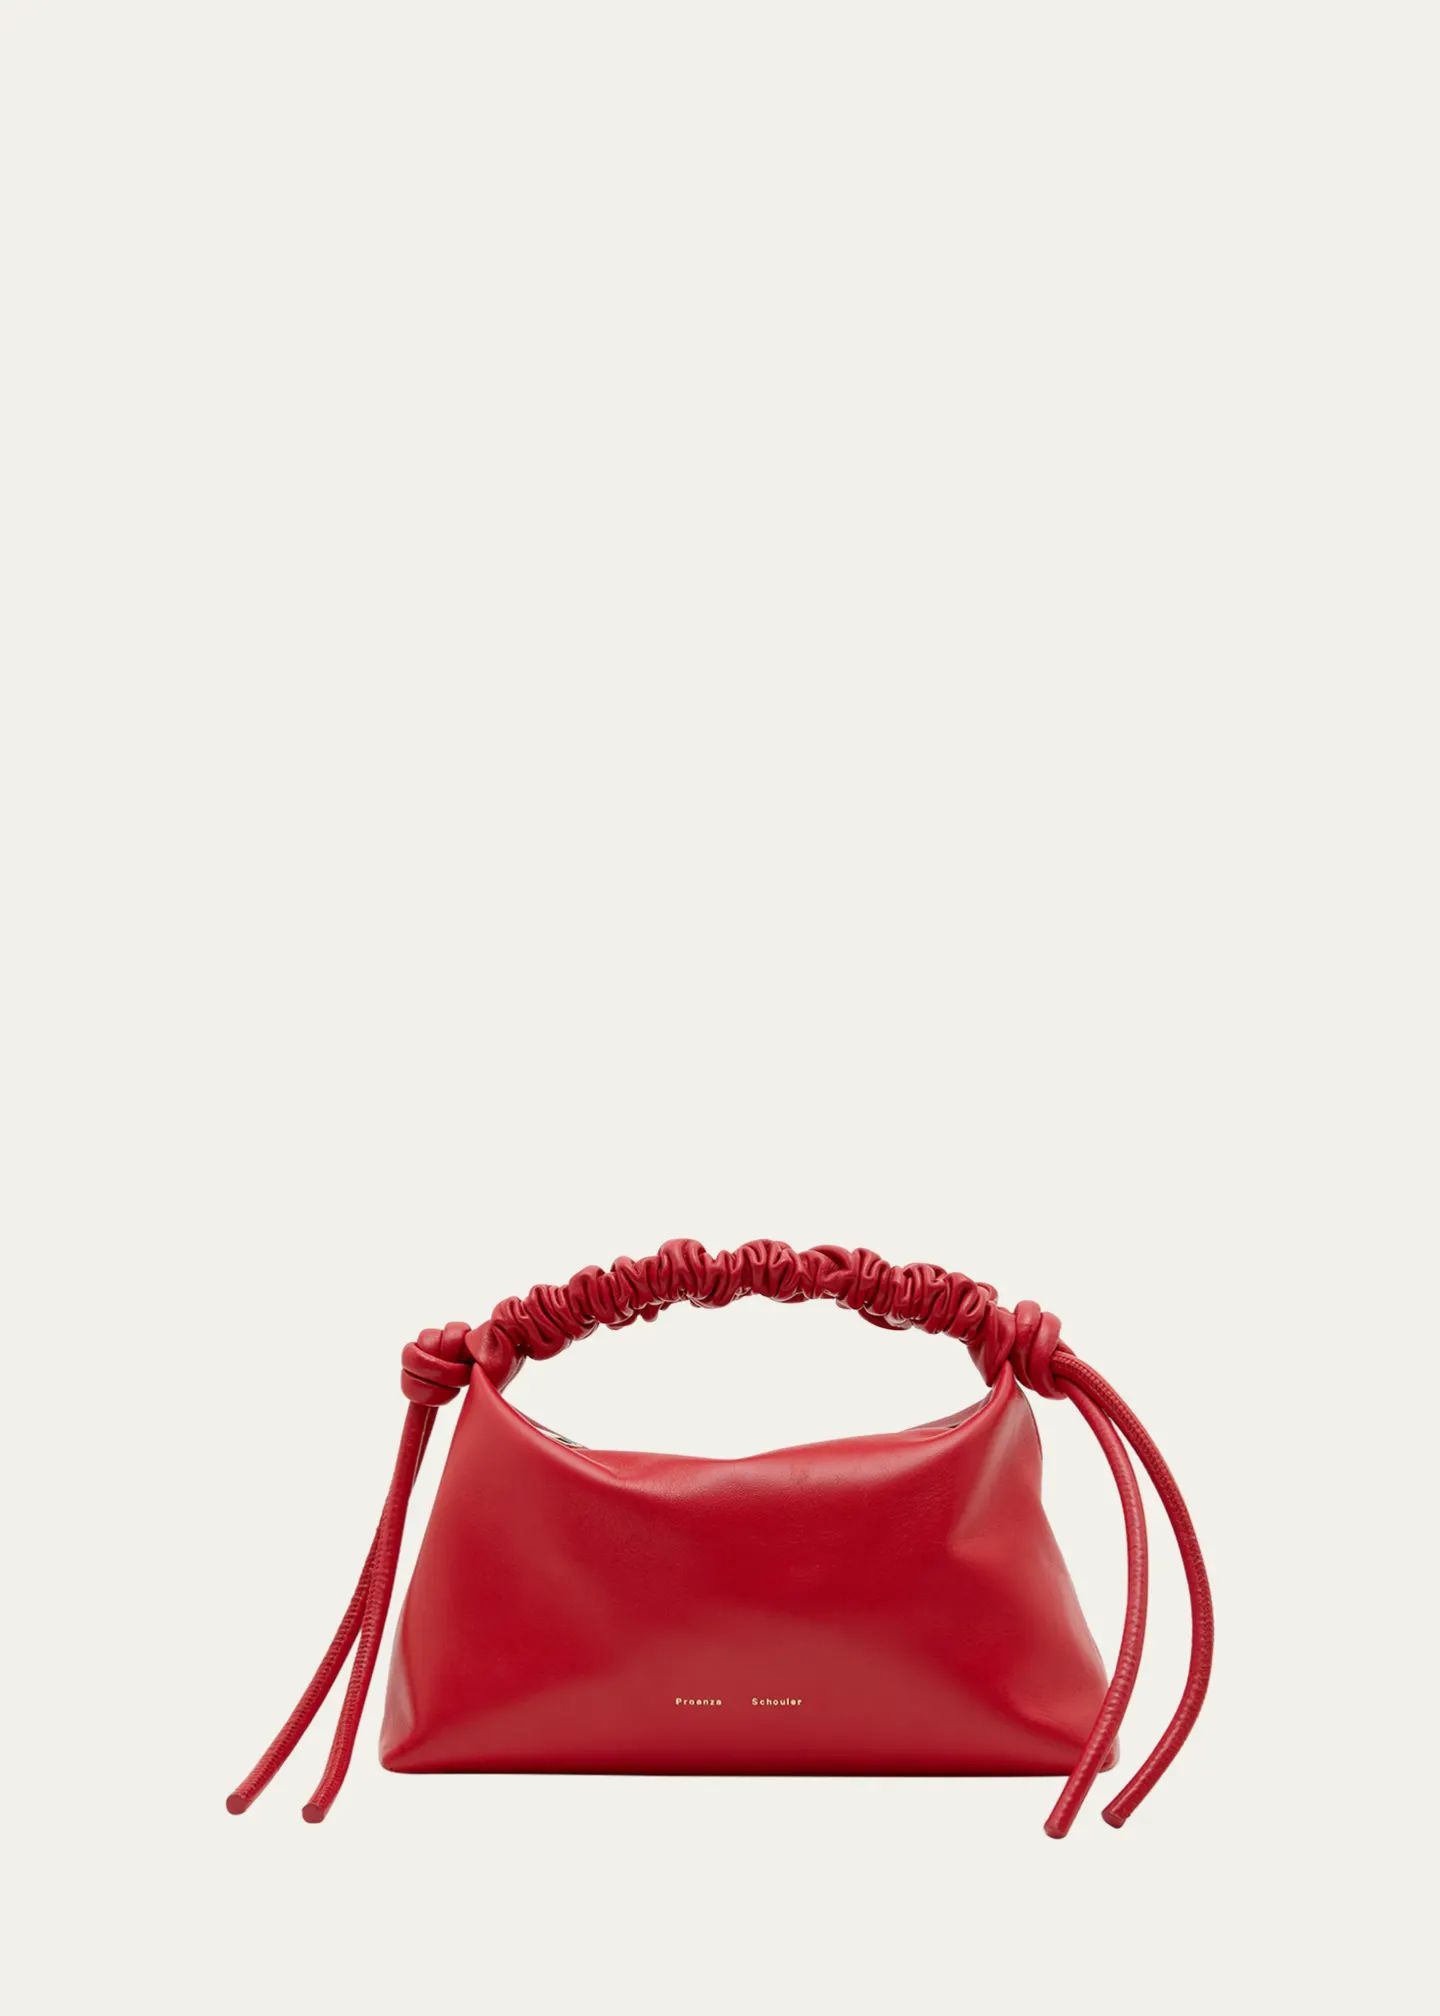 The Beginner's Guide to Luxury Handbags - The Vault